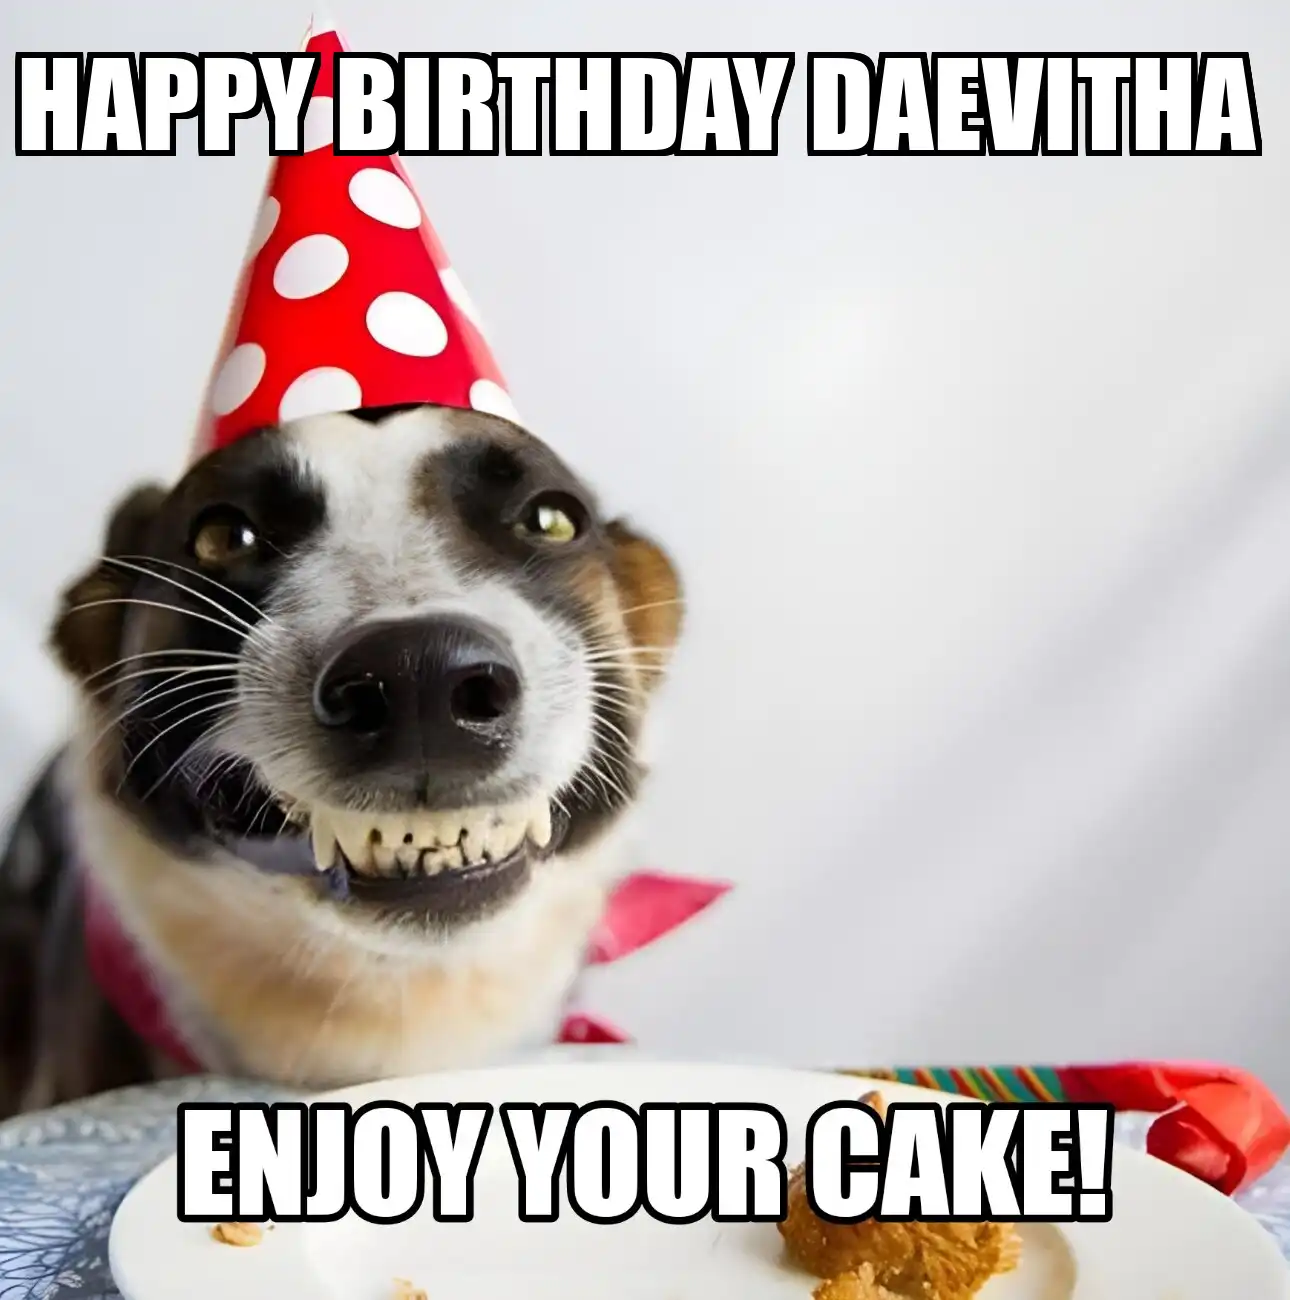 Happy Birthday Daevitha Enjoy Your Cake Dog Meme